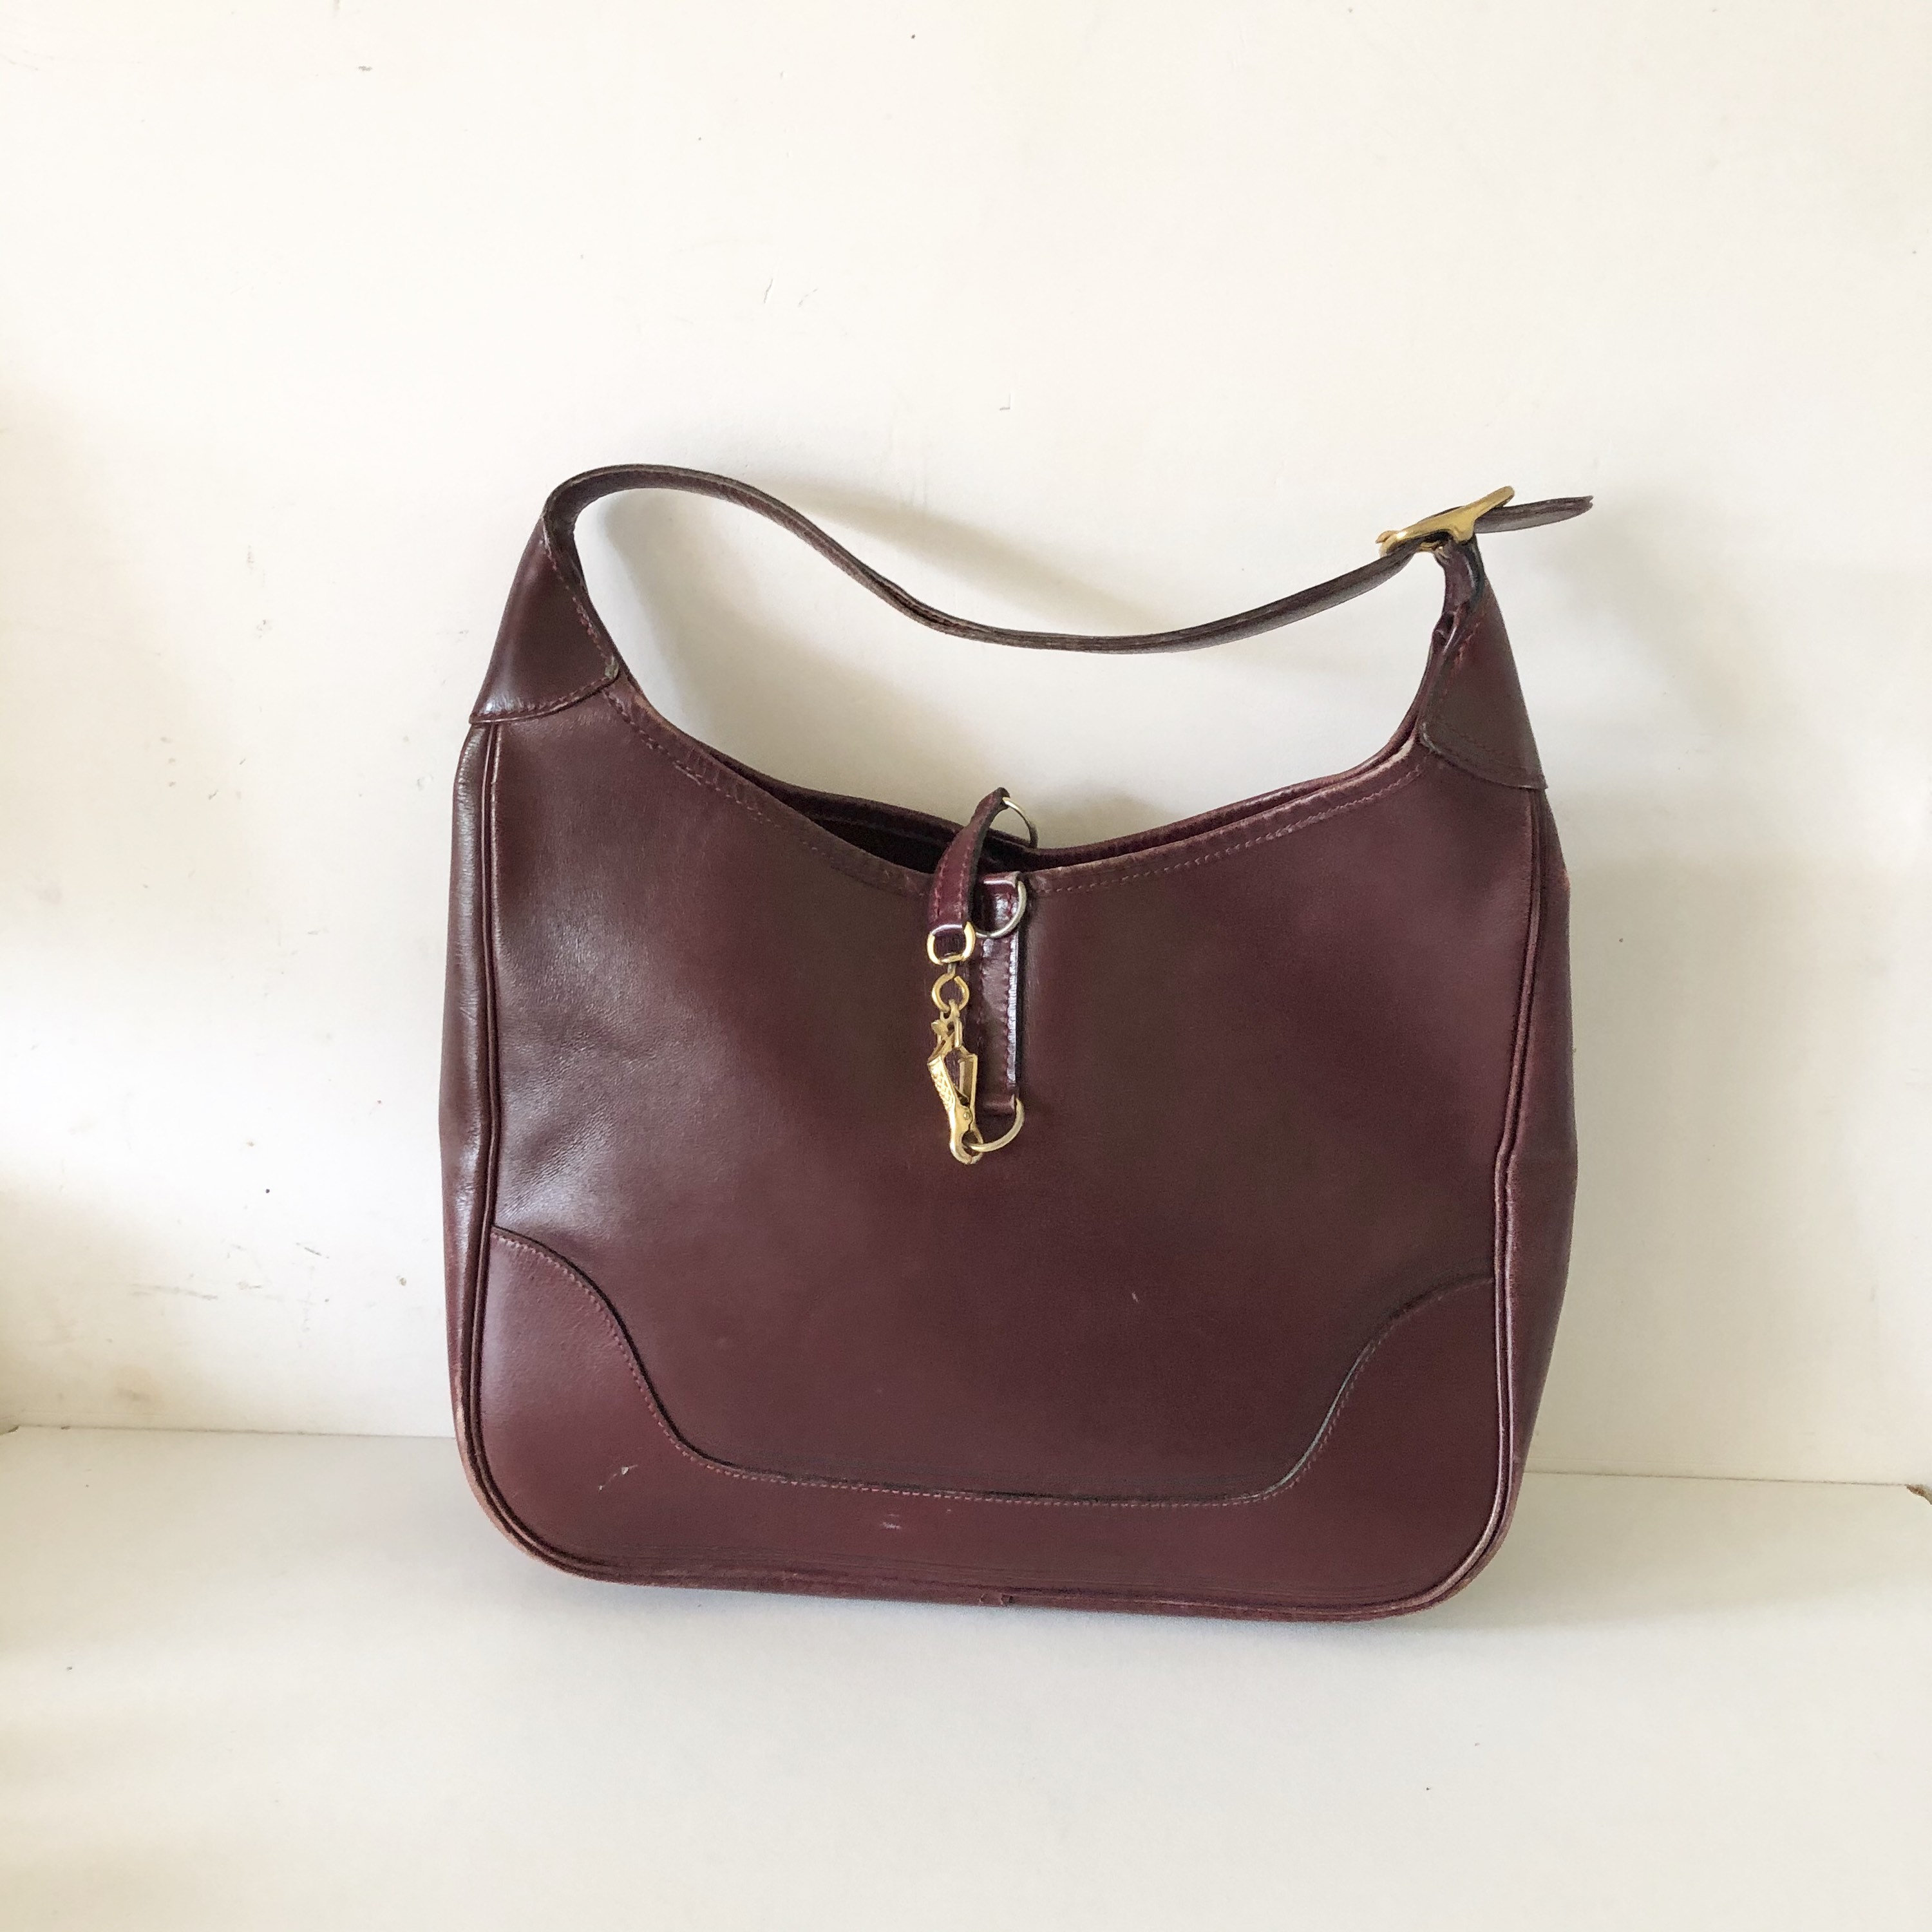 HERMÈS Trim Burgundy Leather Bag • vintage 70s Luxe